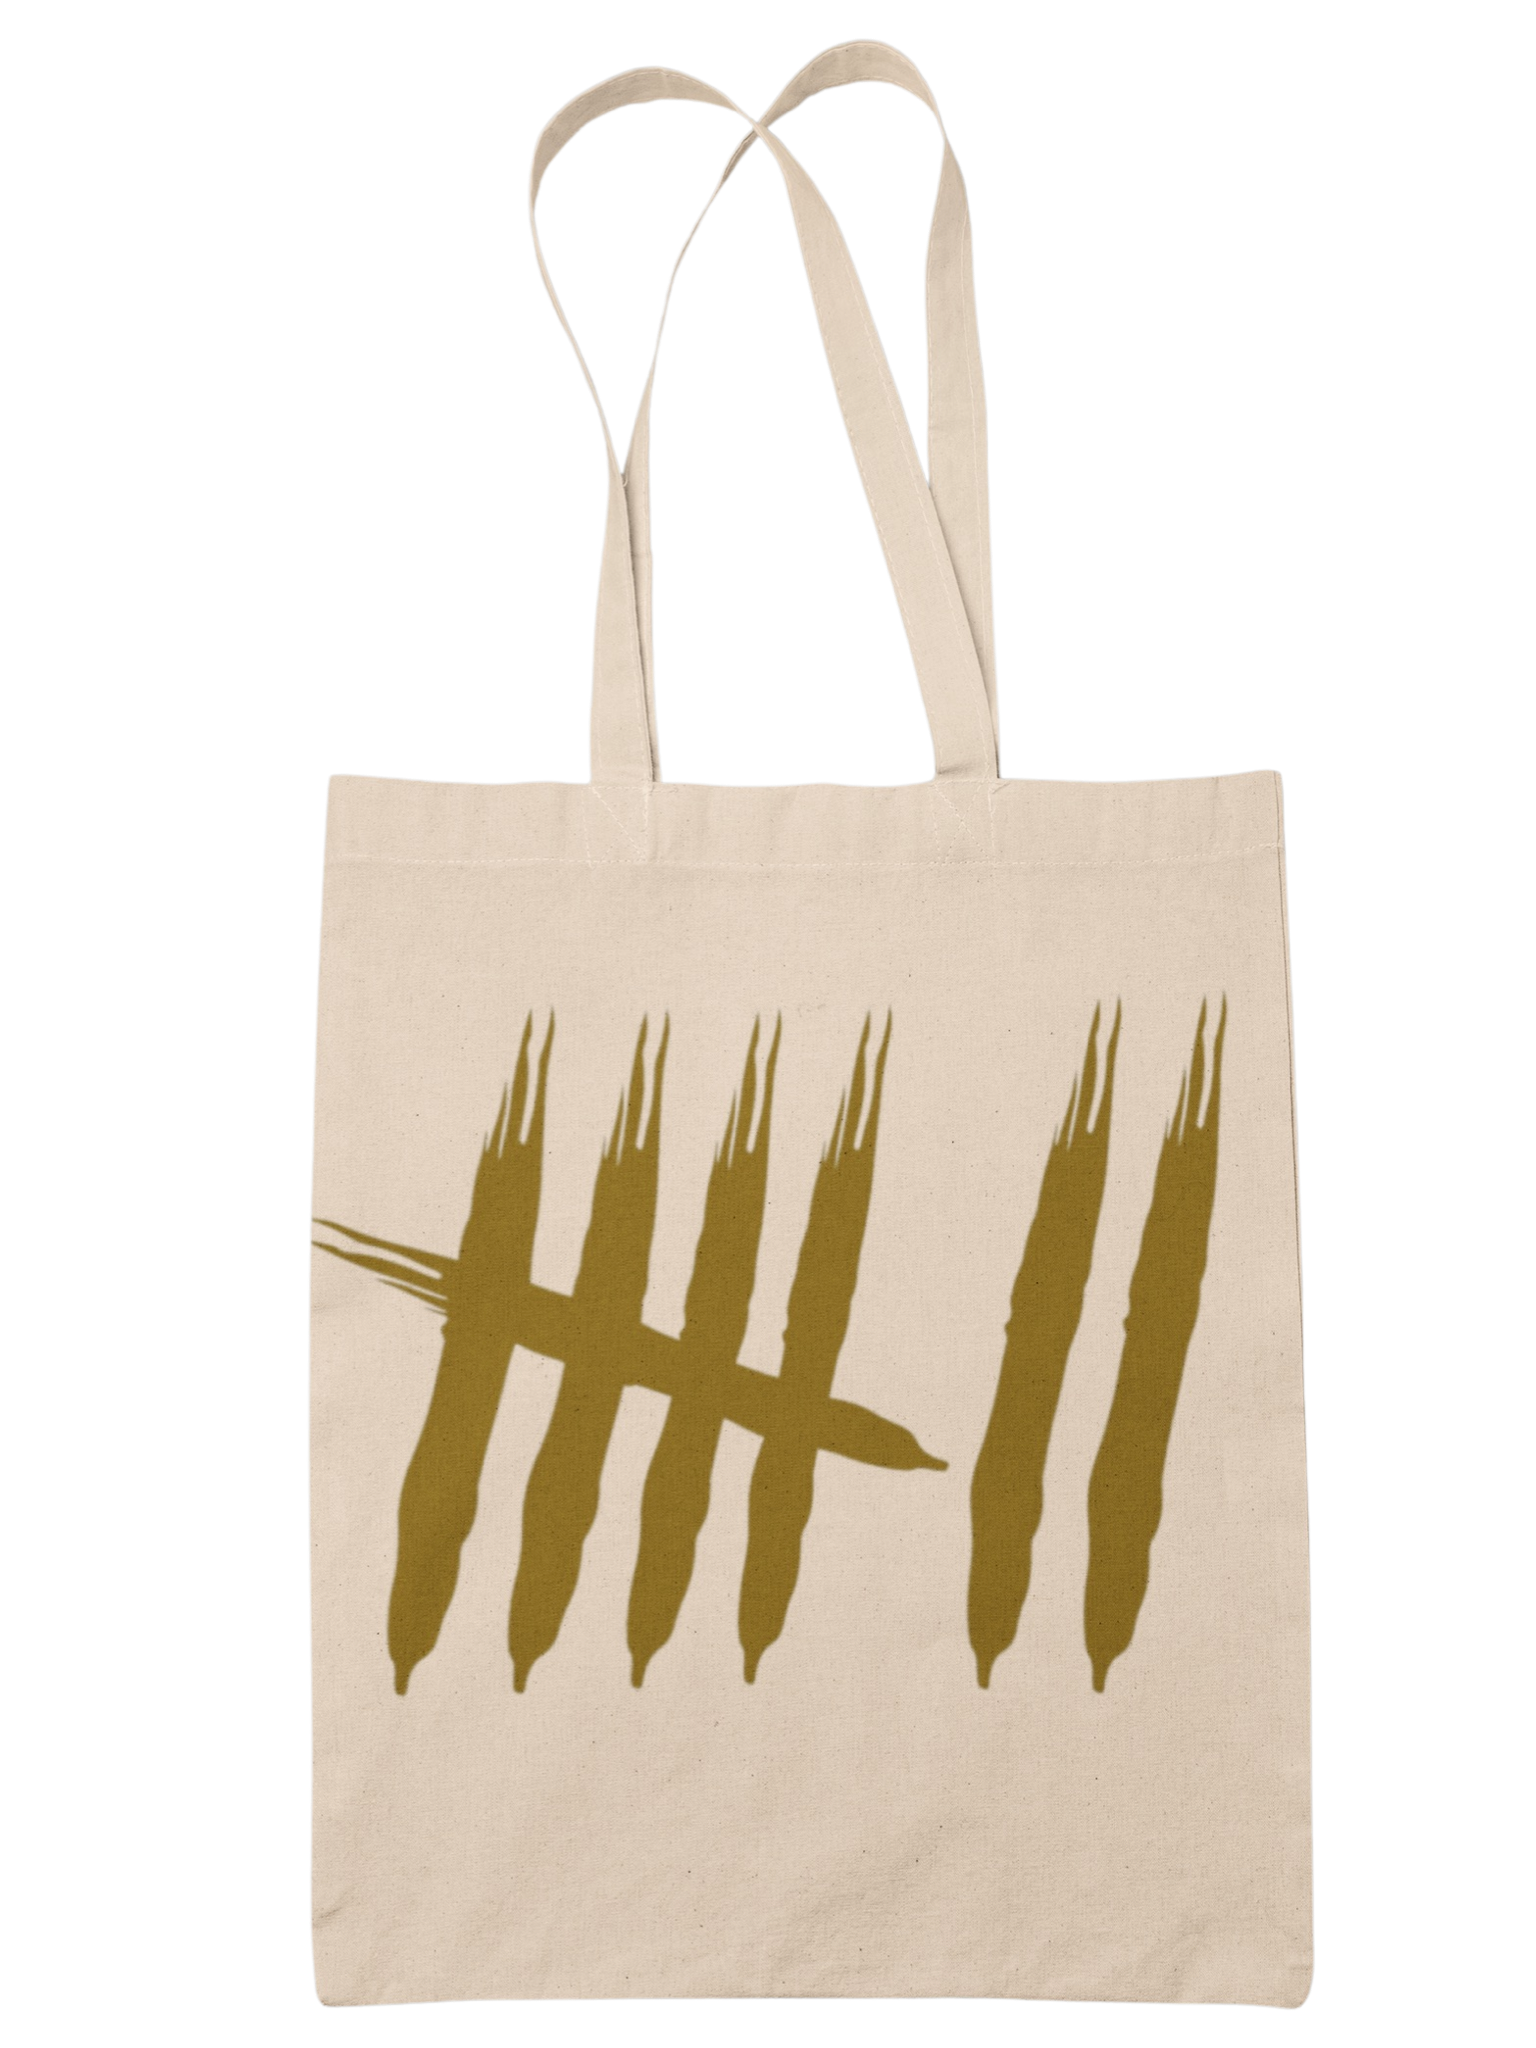 7th Anniversary Tote bag